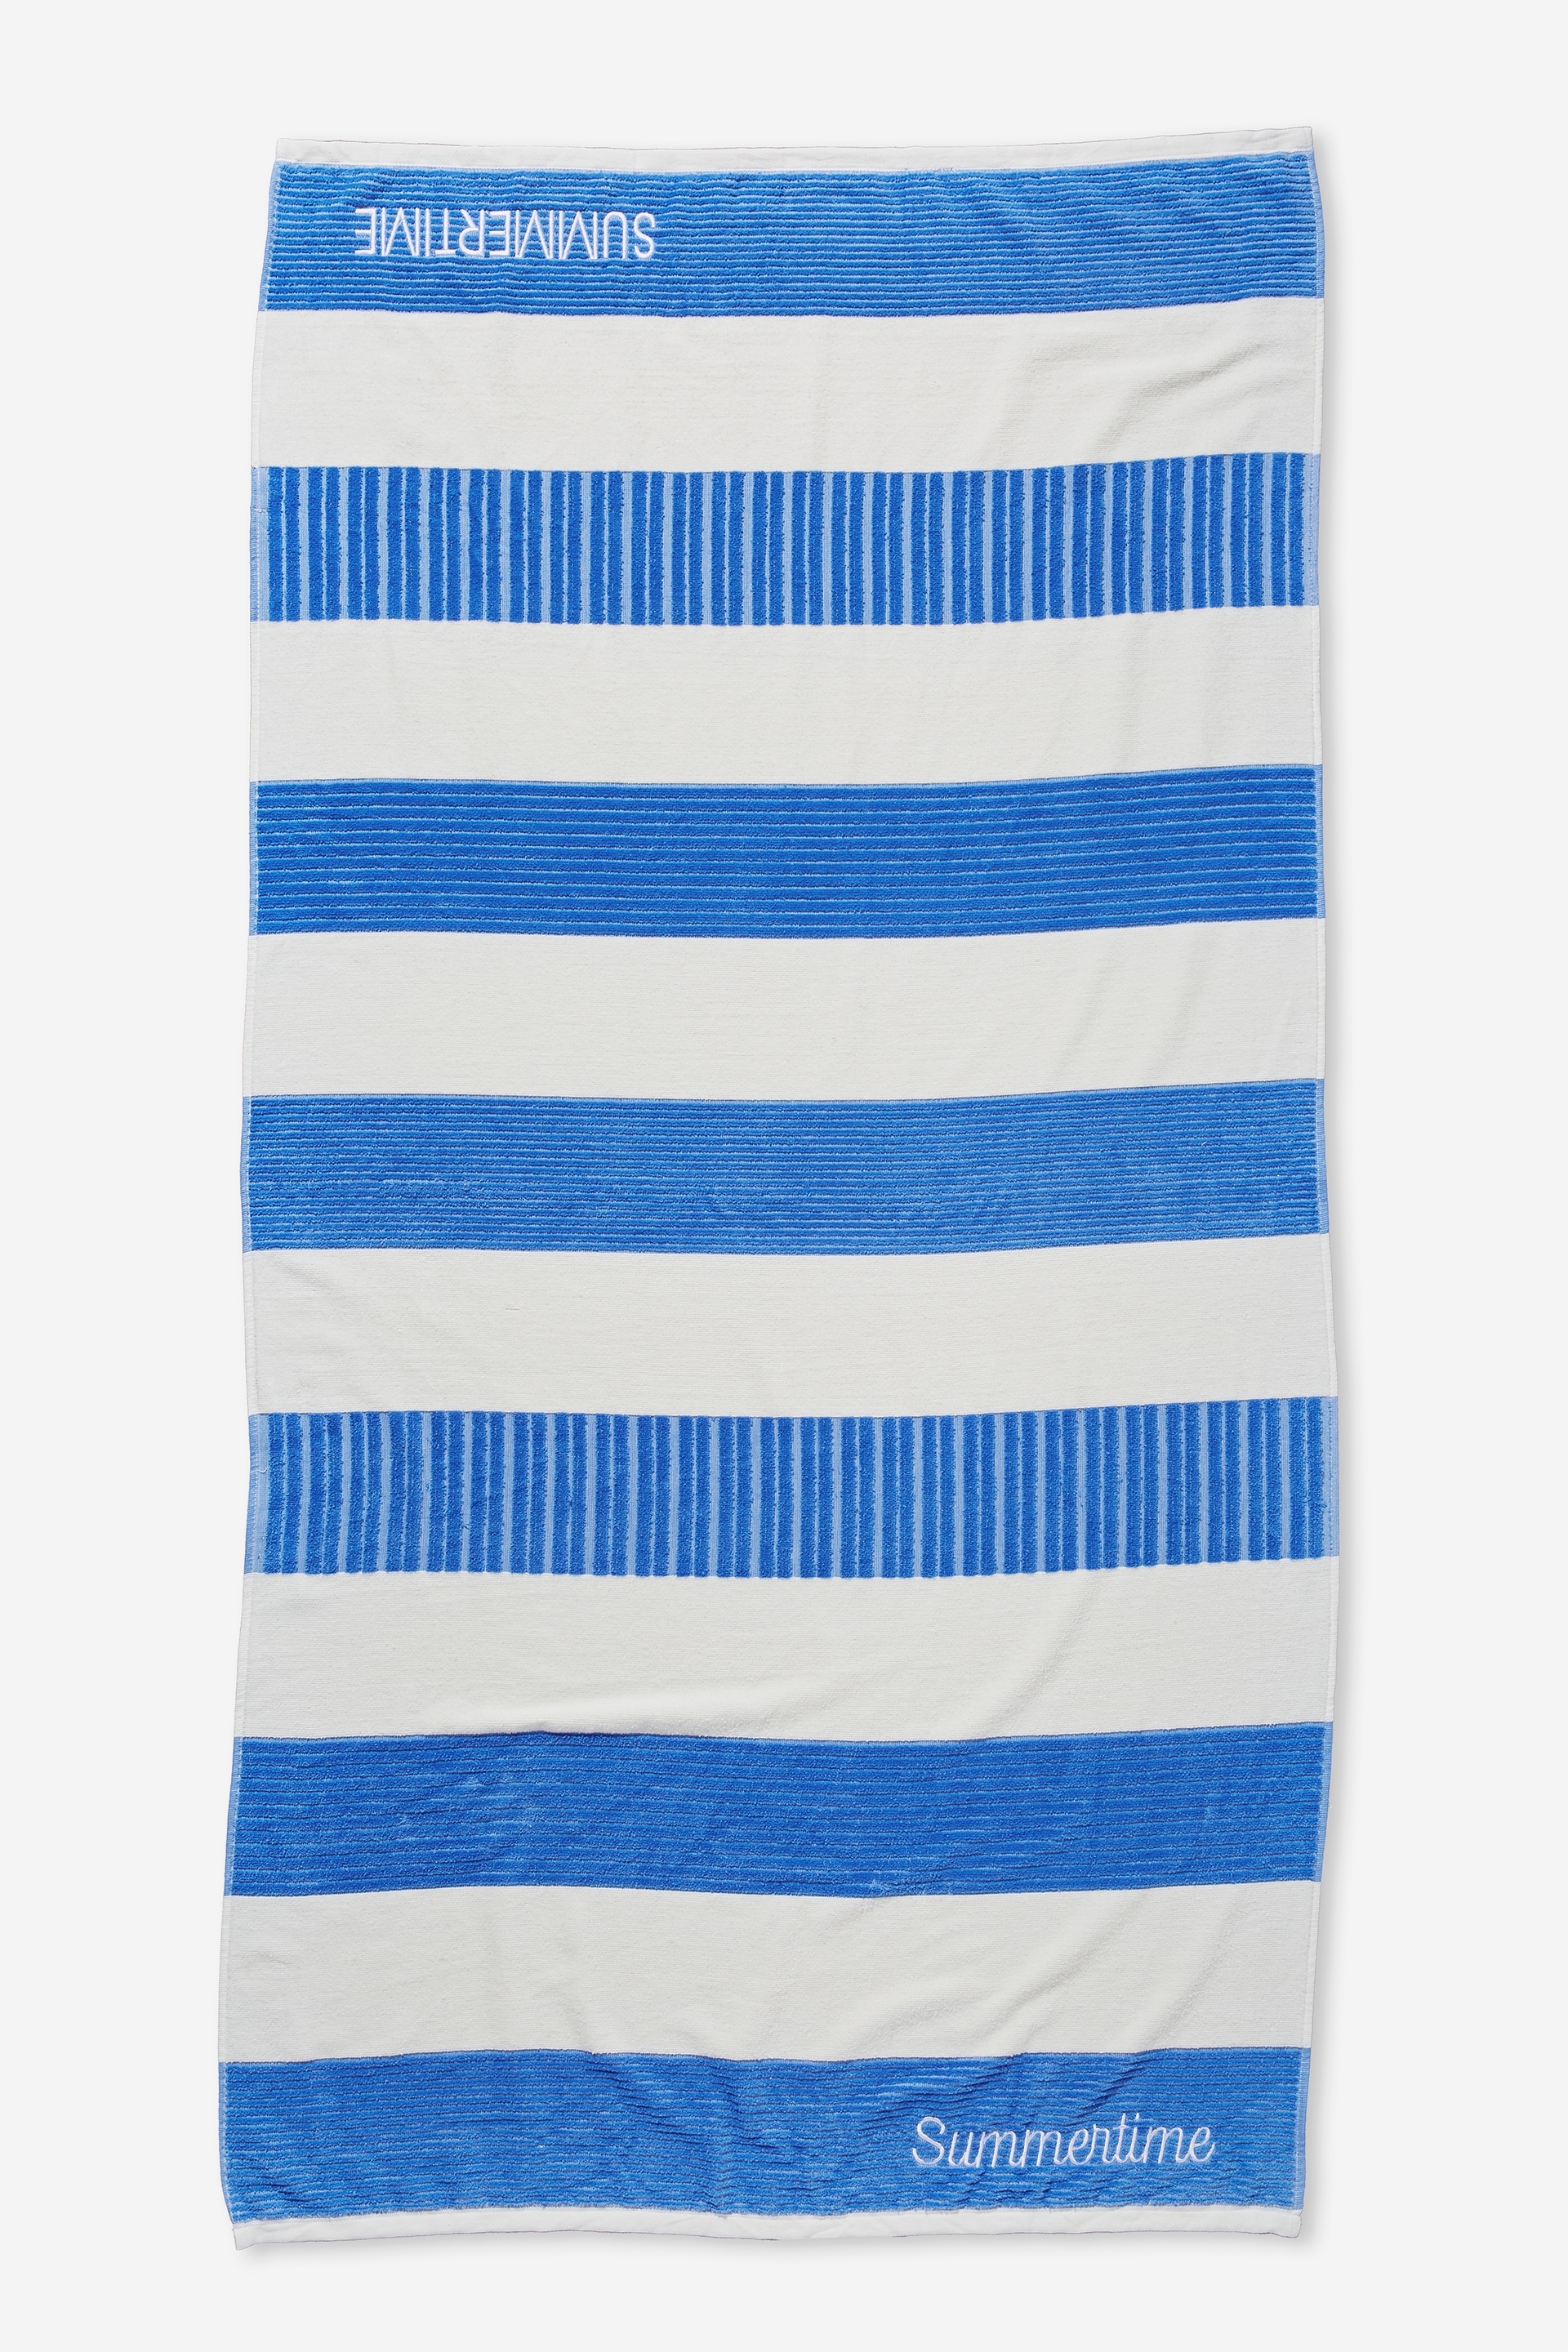 Rubi - Personalised Bondi Rectangle Towel - Cornflower blue horizontal stripe